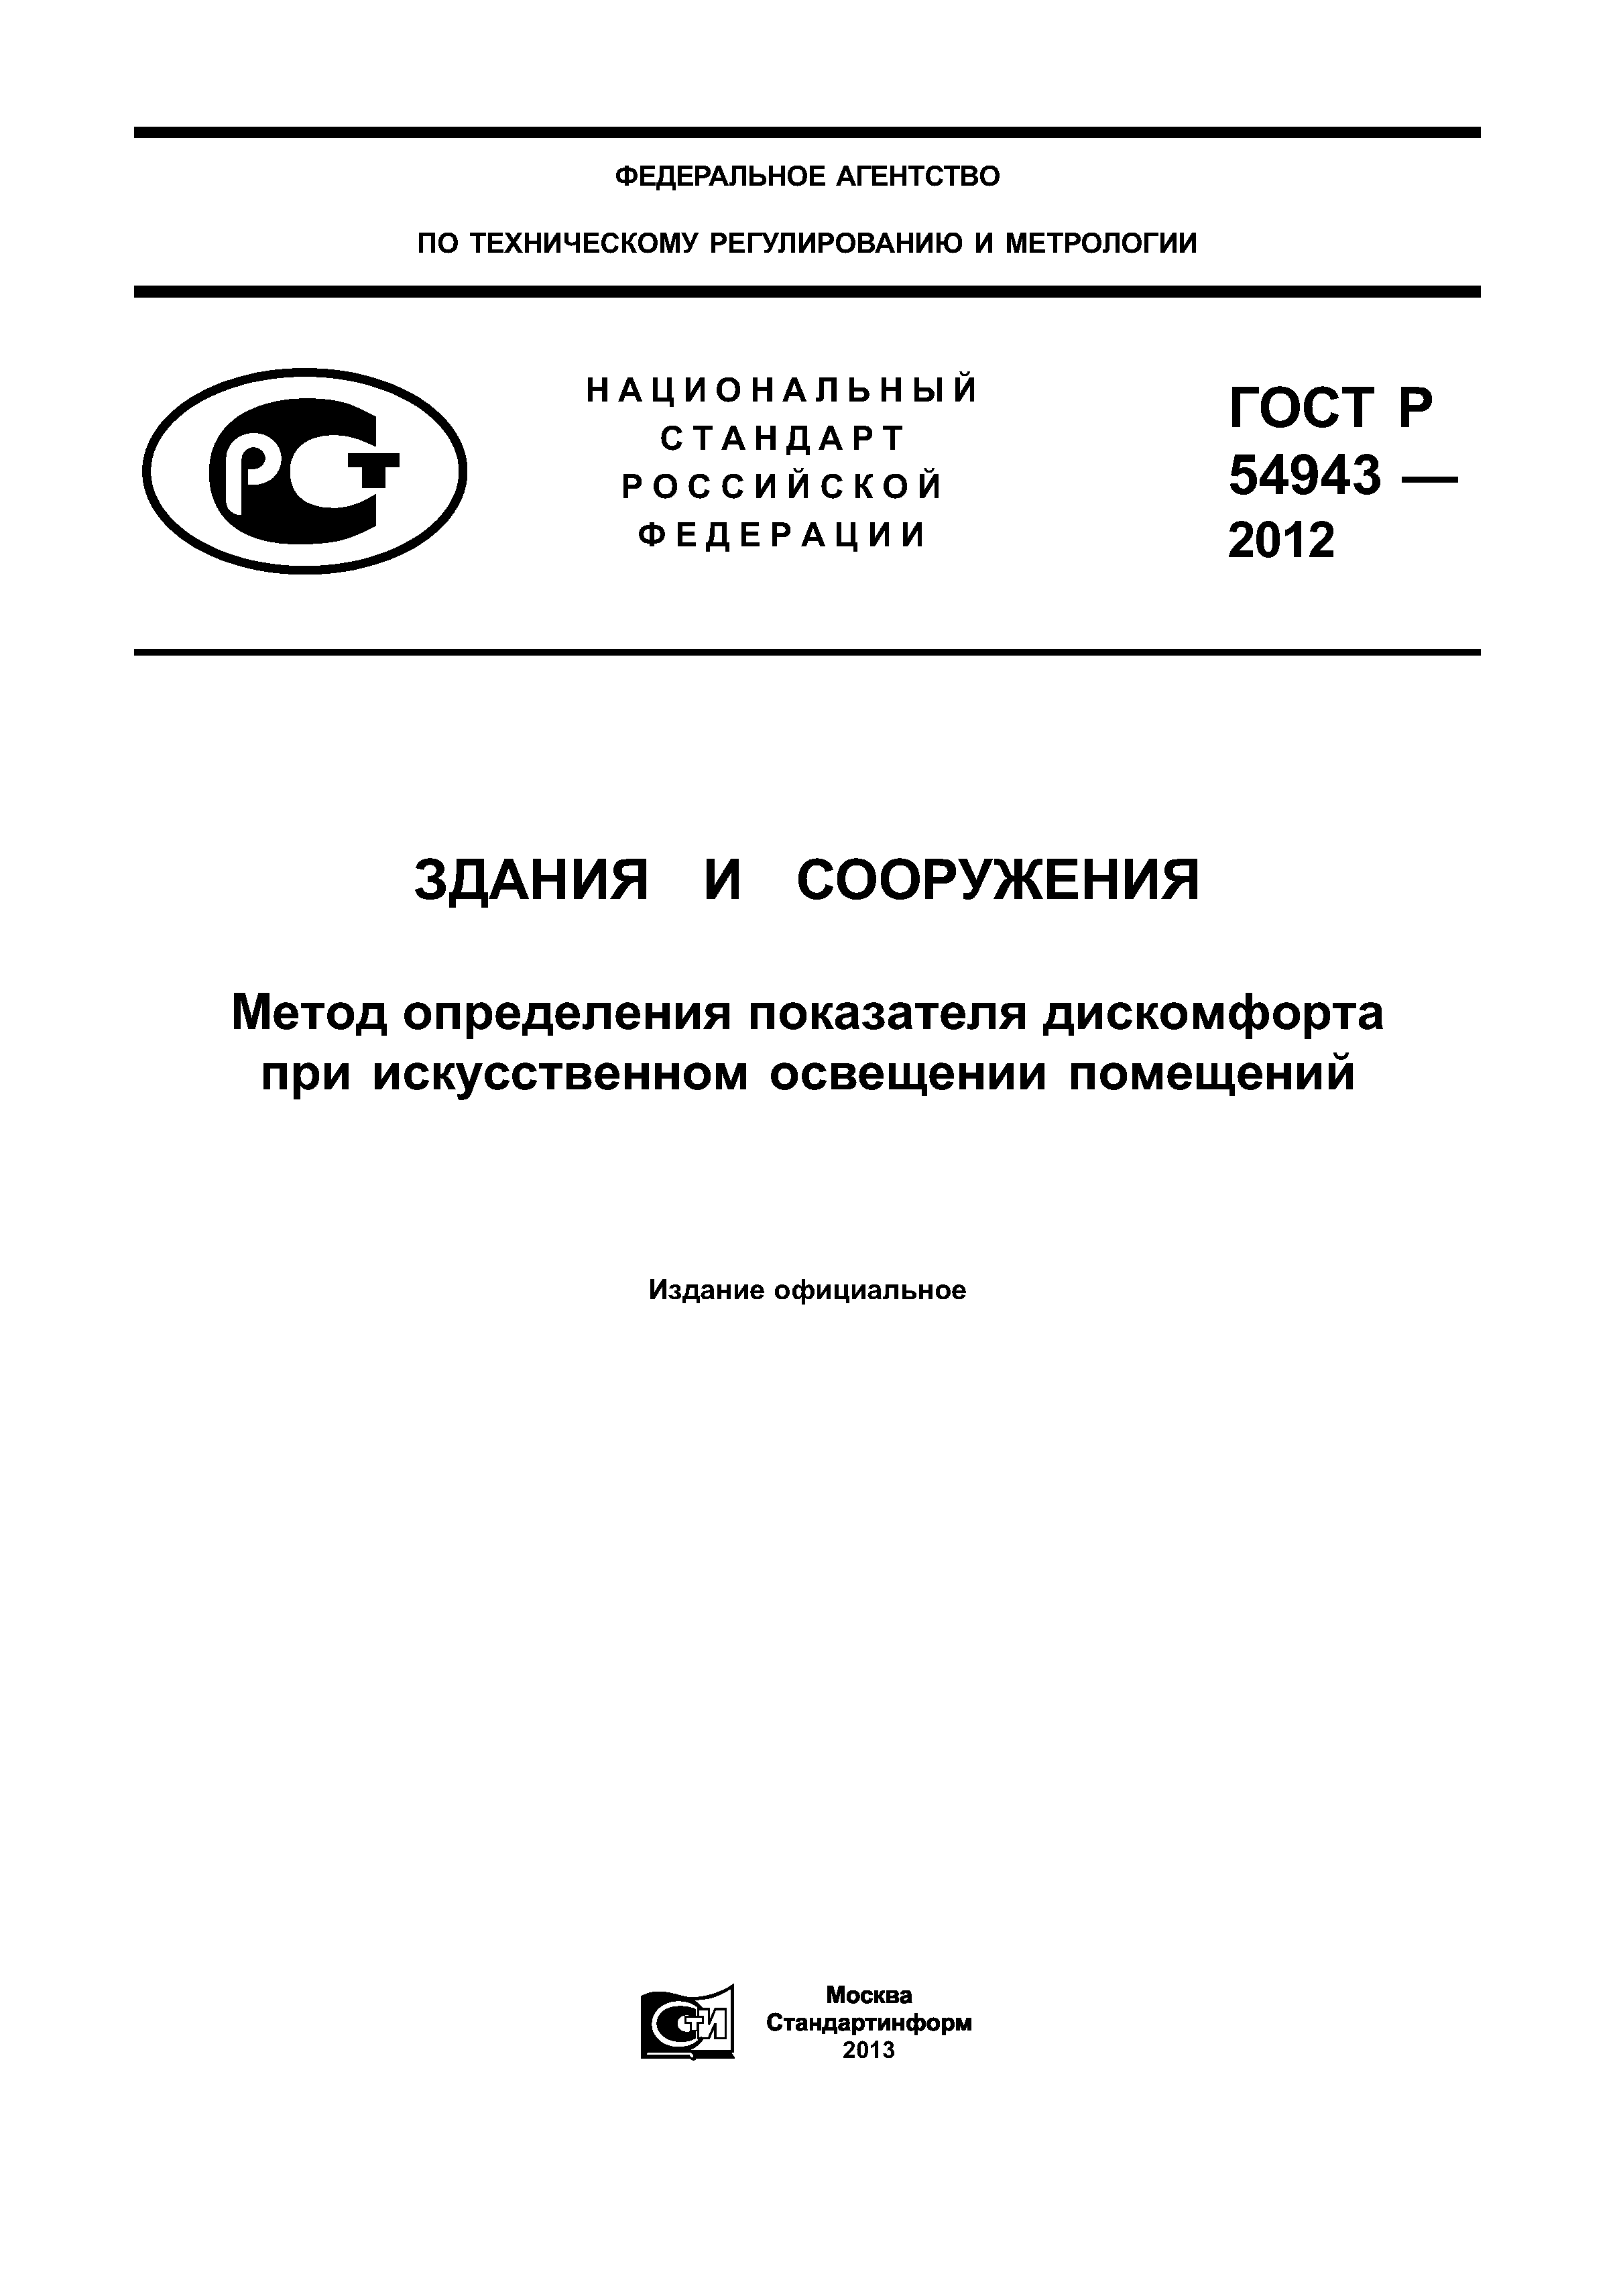 ГОСТ Р 54943-2012